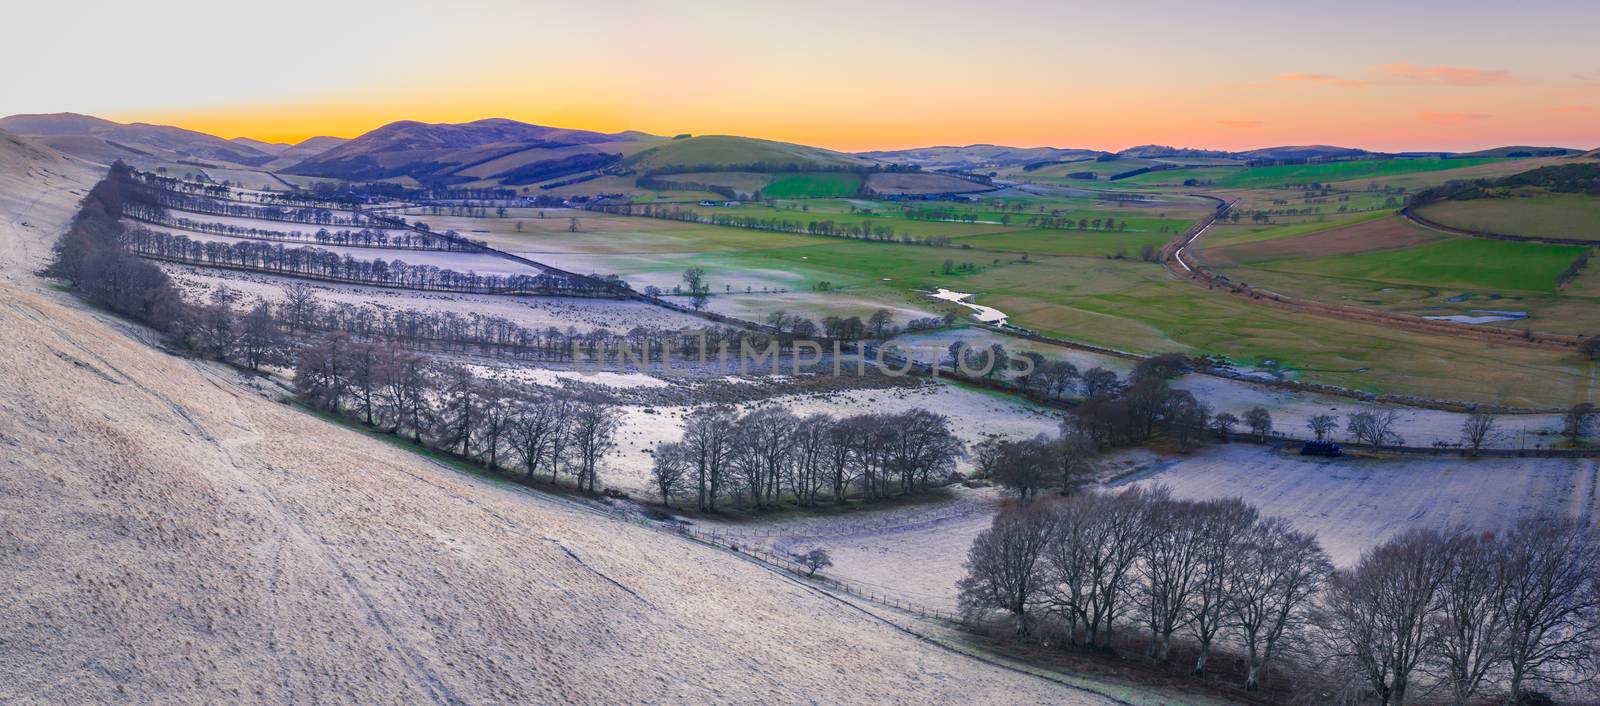 Scottish Winter Panorama Landscape by mrdoomits